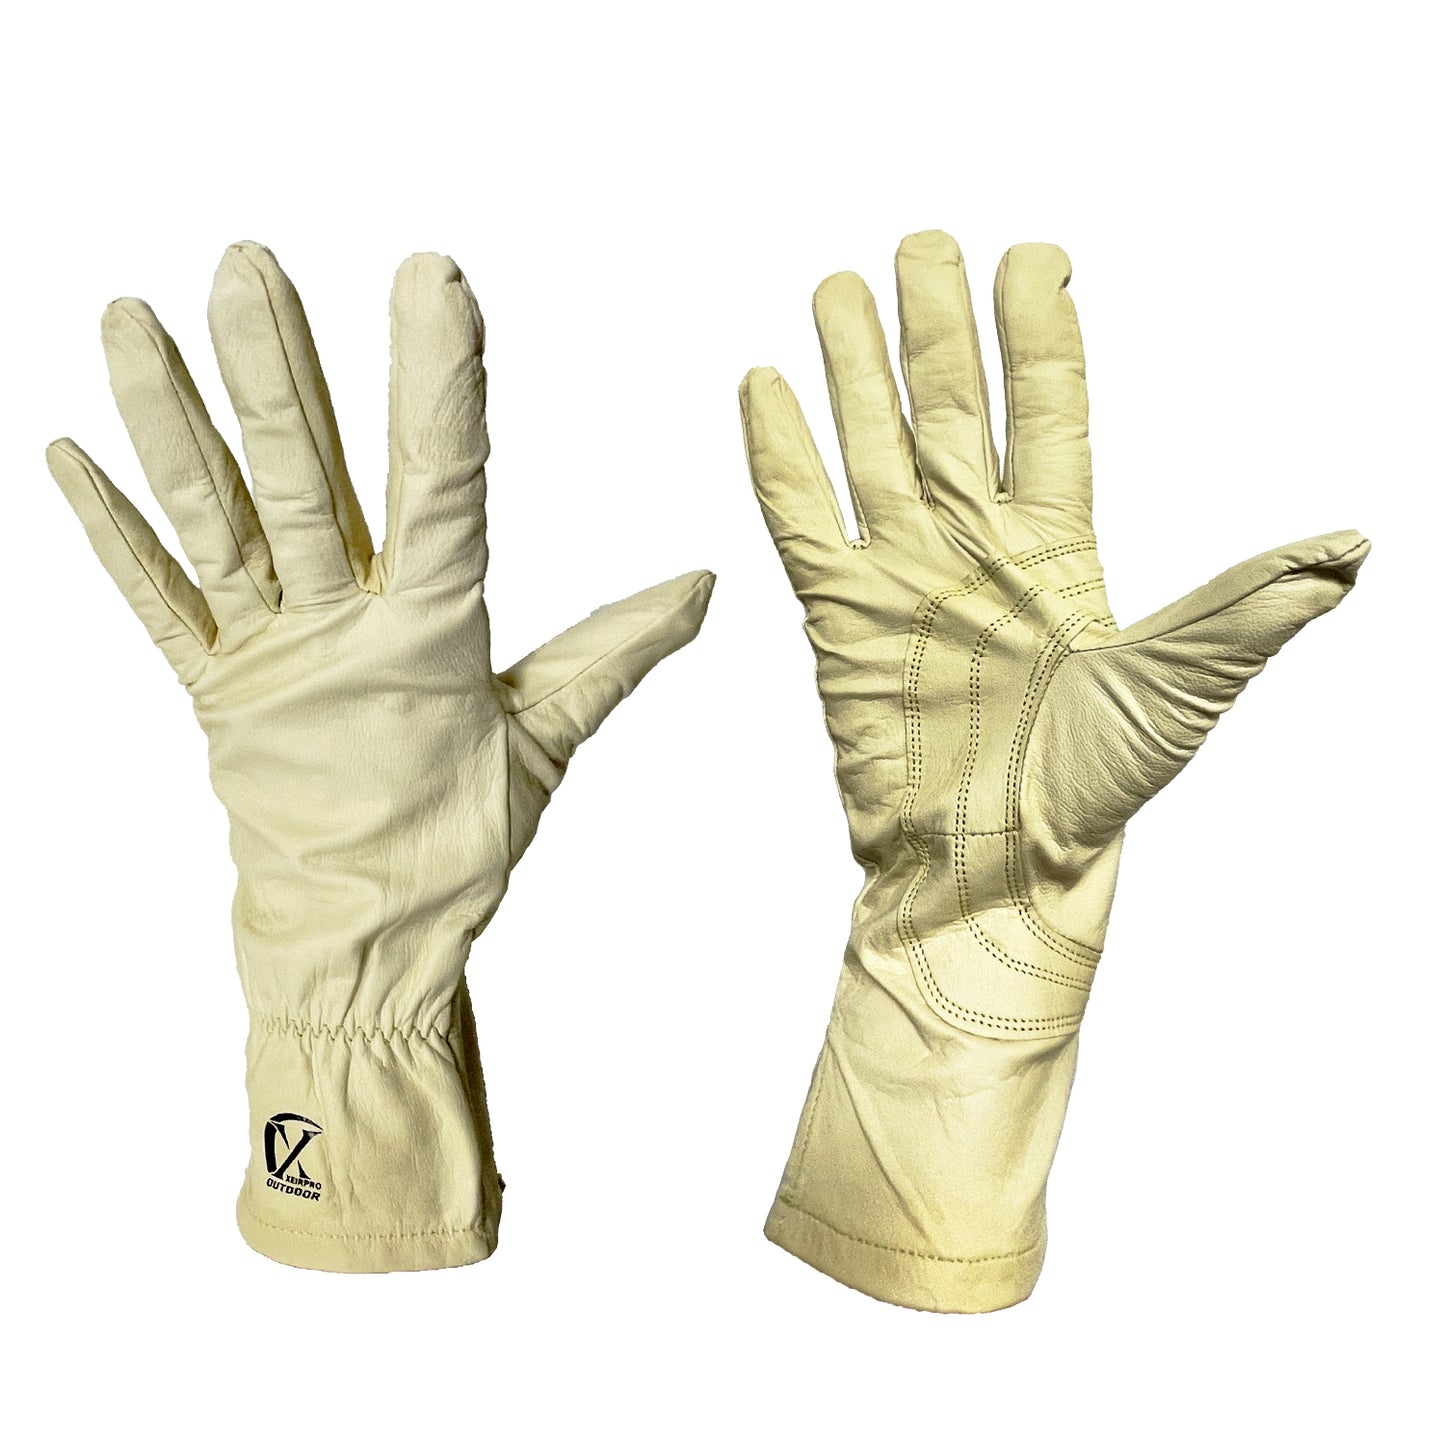 XEIR PRO Heavy Duty Goatskin Work Gloves (2 Pack)